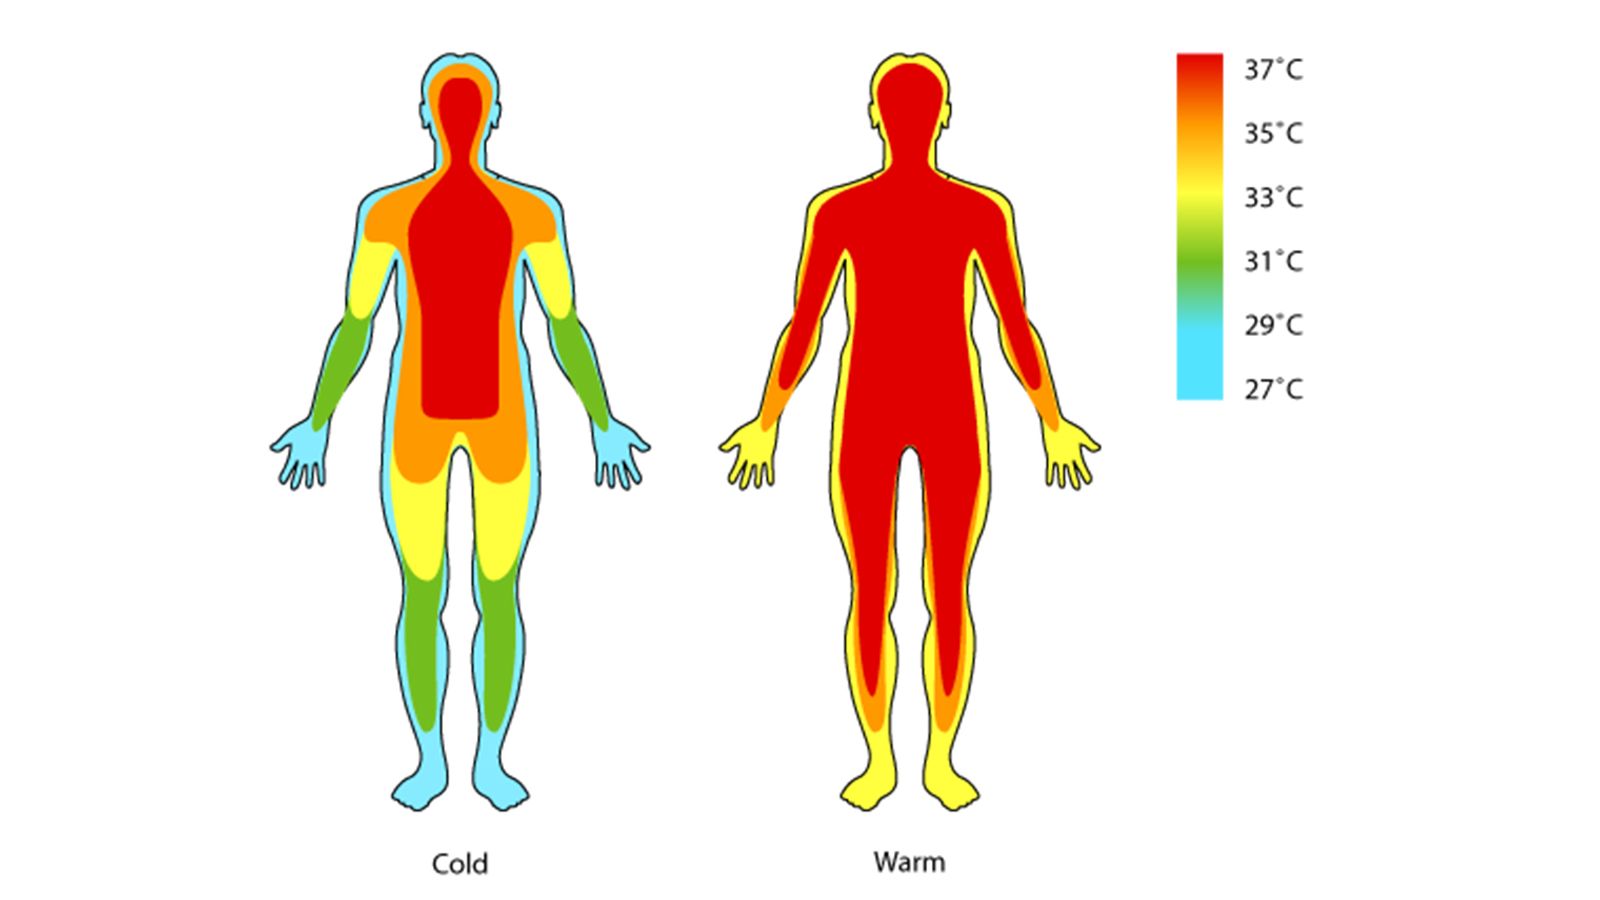 Human warm. Терморегуляция тела. Теплообмен организма. Терморегуляция человеческого организма. Регуляция температуры тела человека.